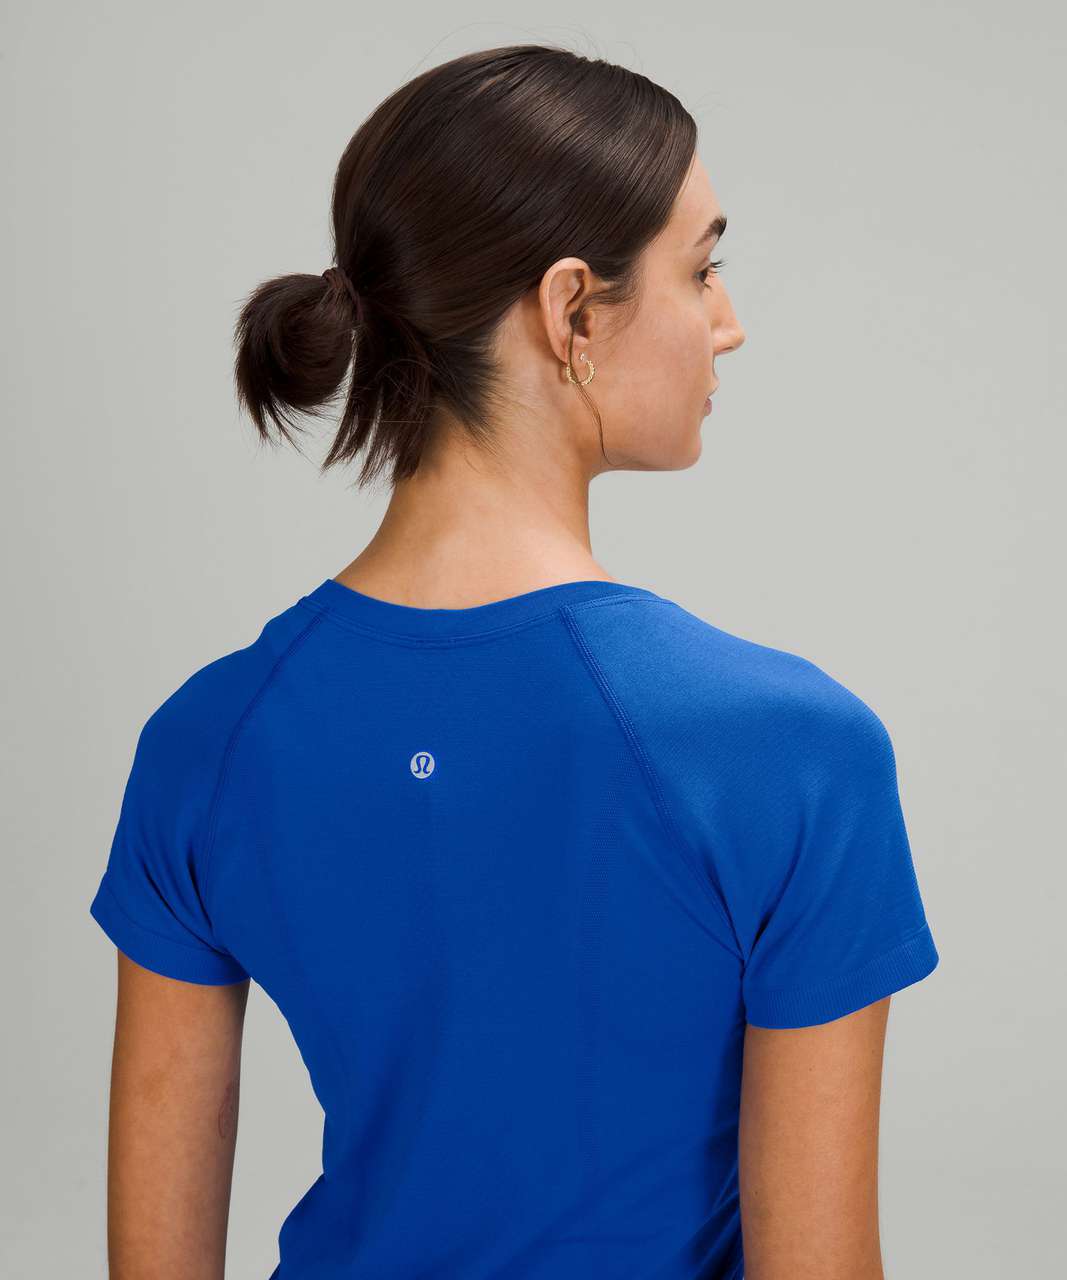 Lululemon Symphony Blue Swiftly Tech Short Sleeve Shirt 2.0 Size 8 - $65 -  From Kylie